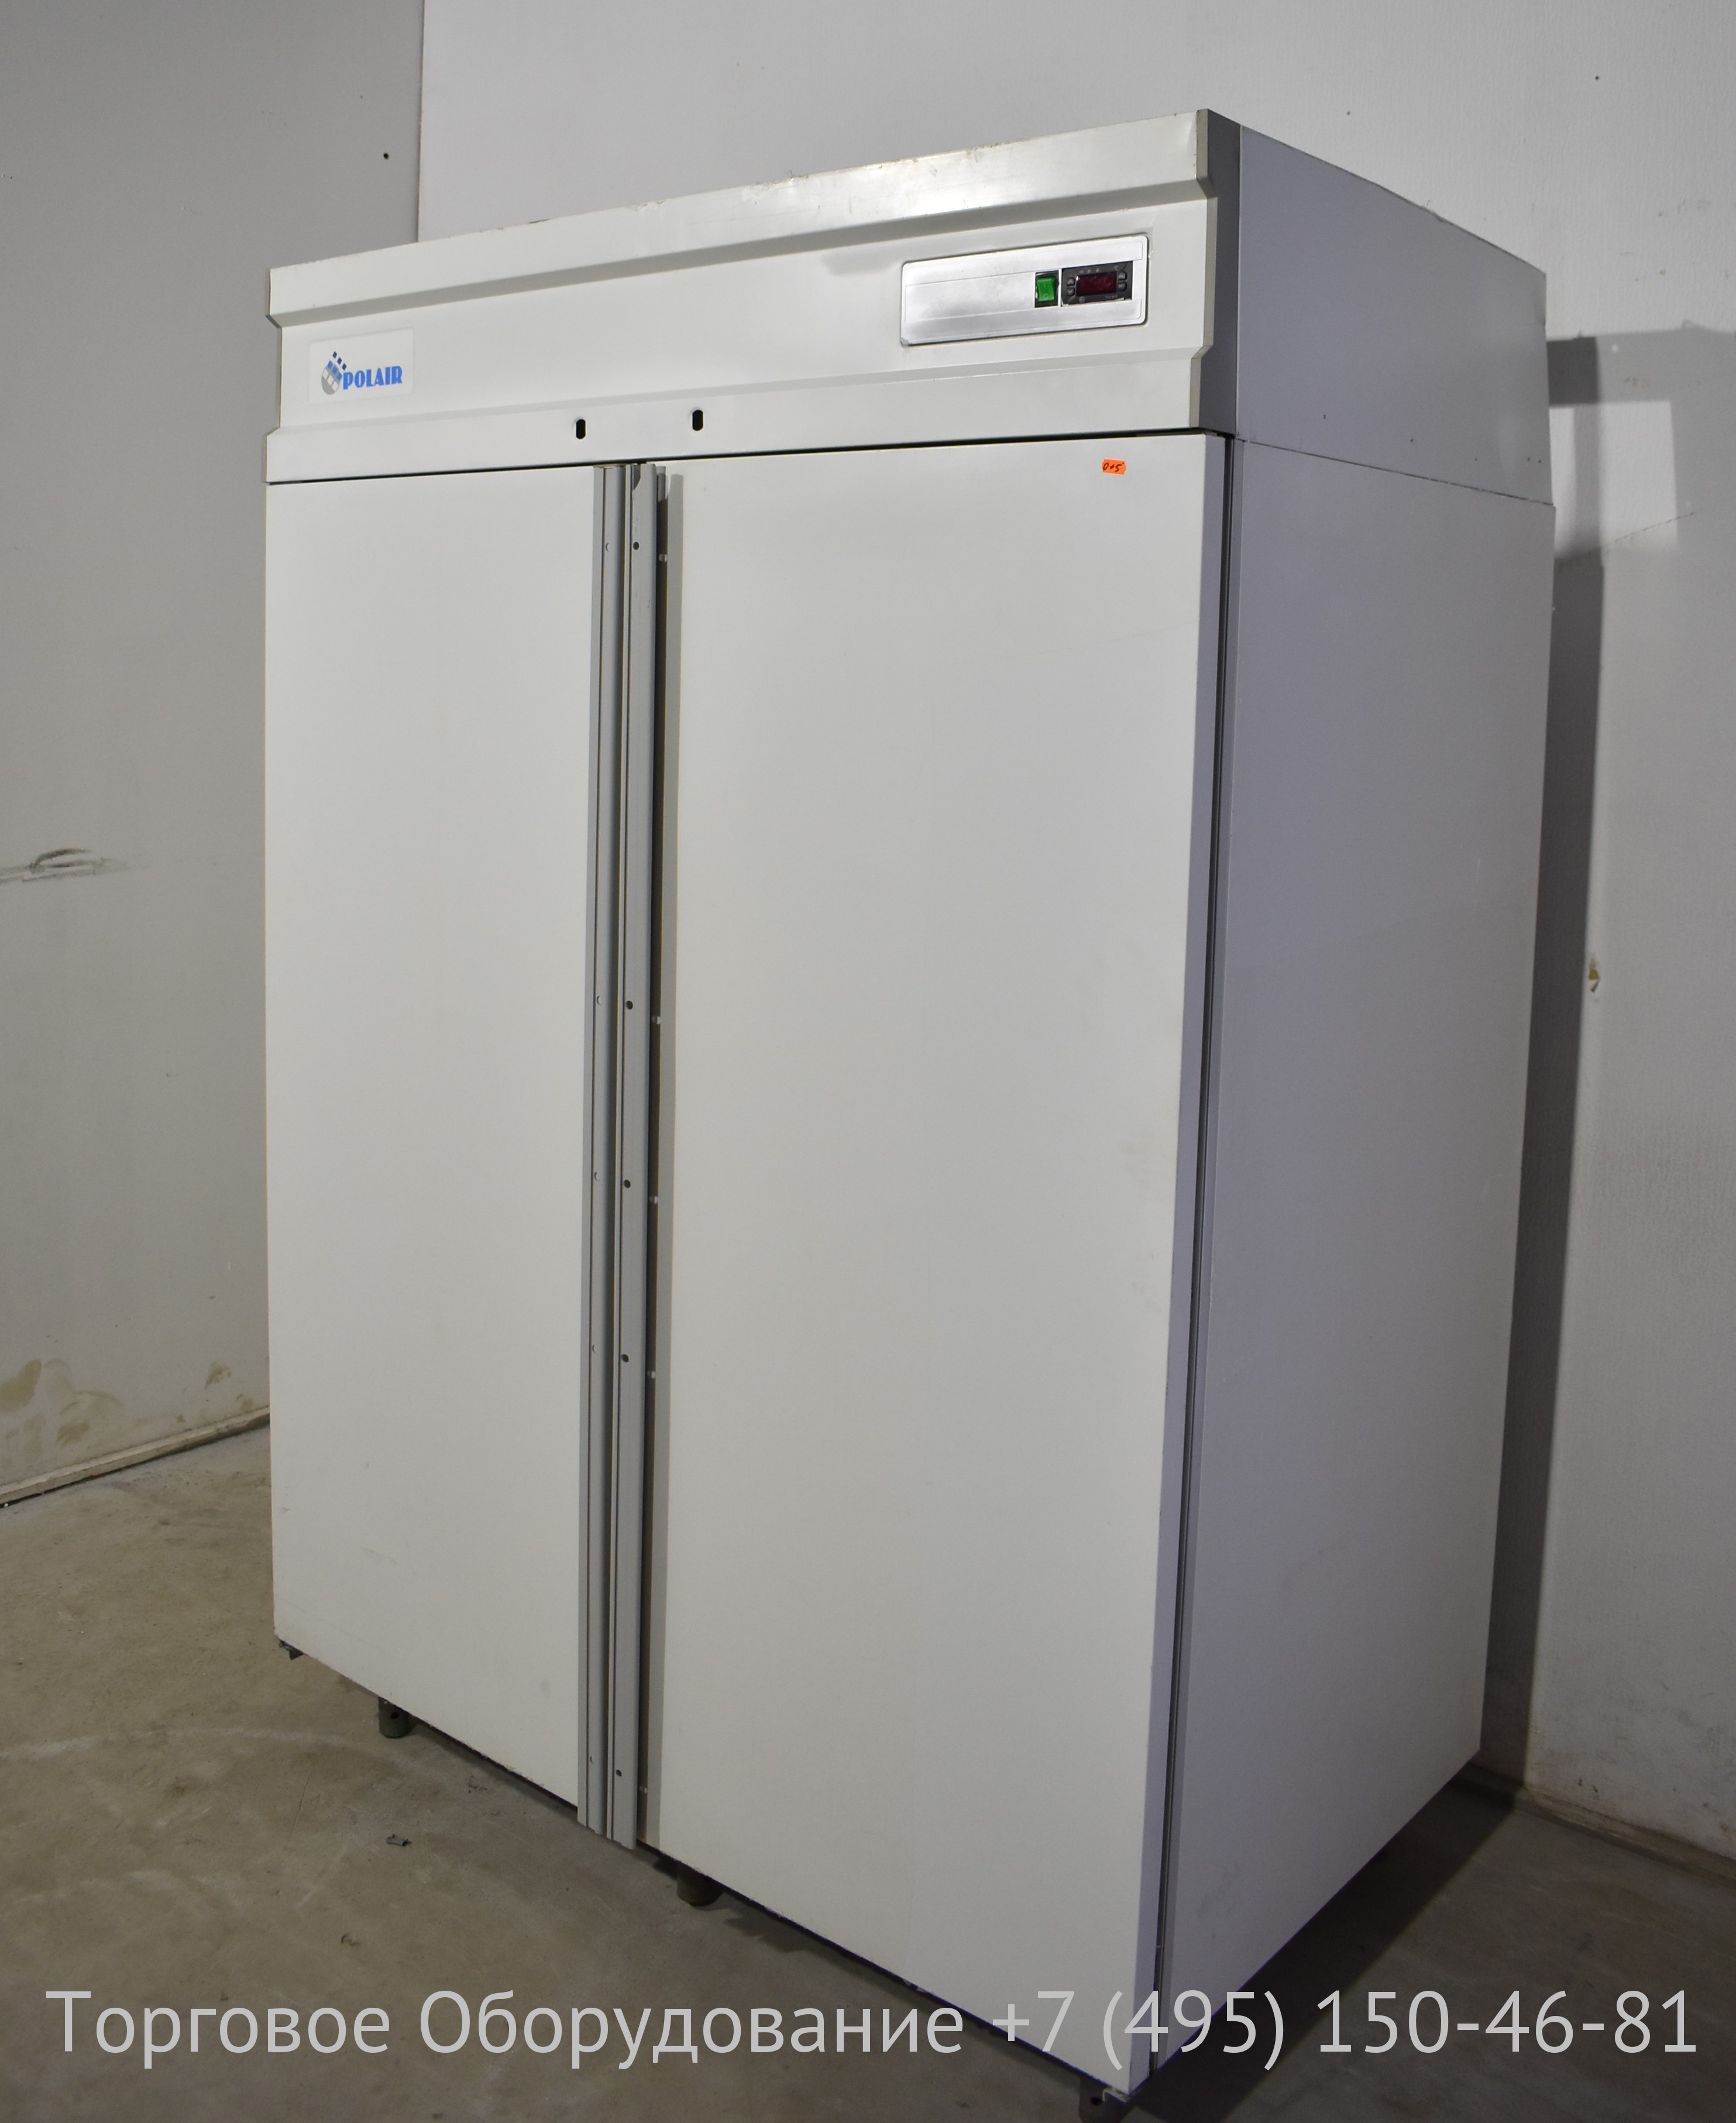 Cb107 s. Шкаф холодильный Polair cb107-s. Шкаф холодильный Polair cm110-s. Холодильный шкаф Полаир 700. Морозильный шкаф Полаир 1400.